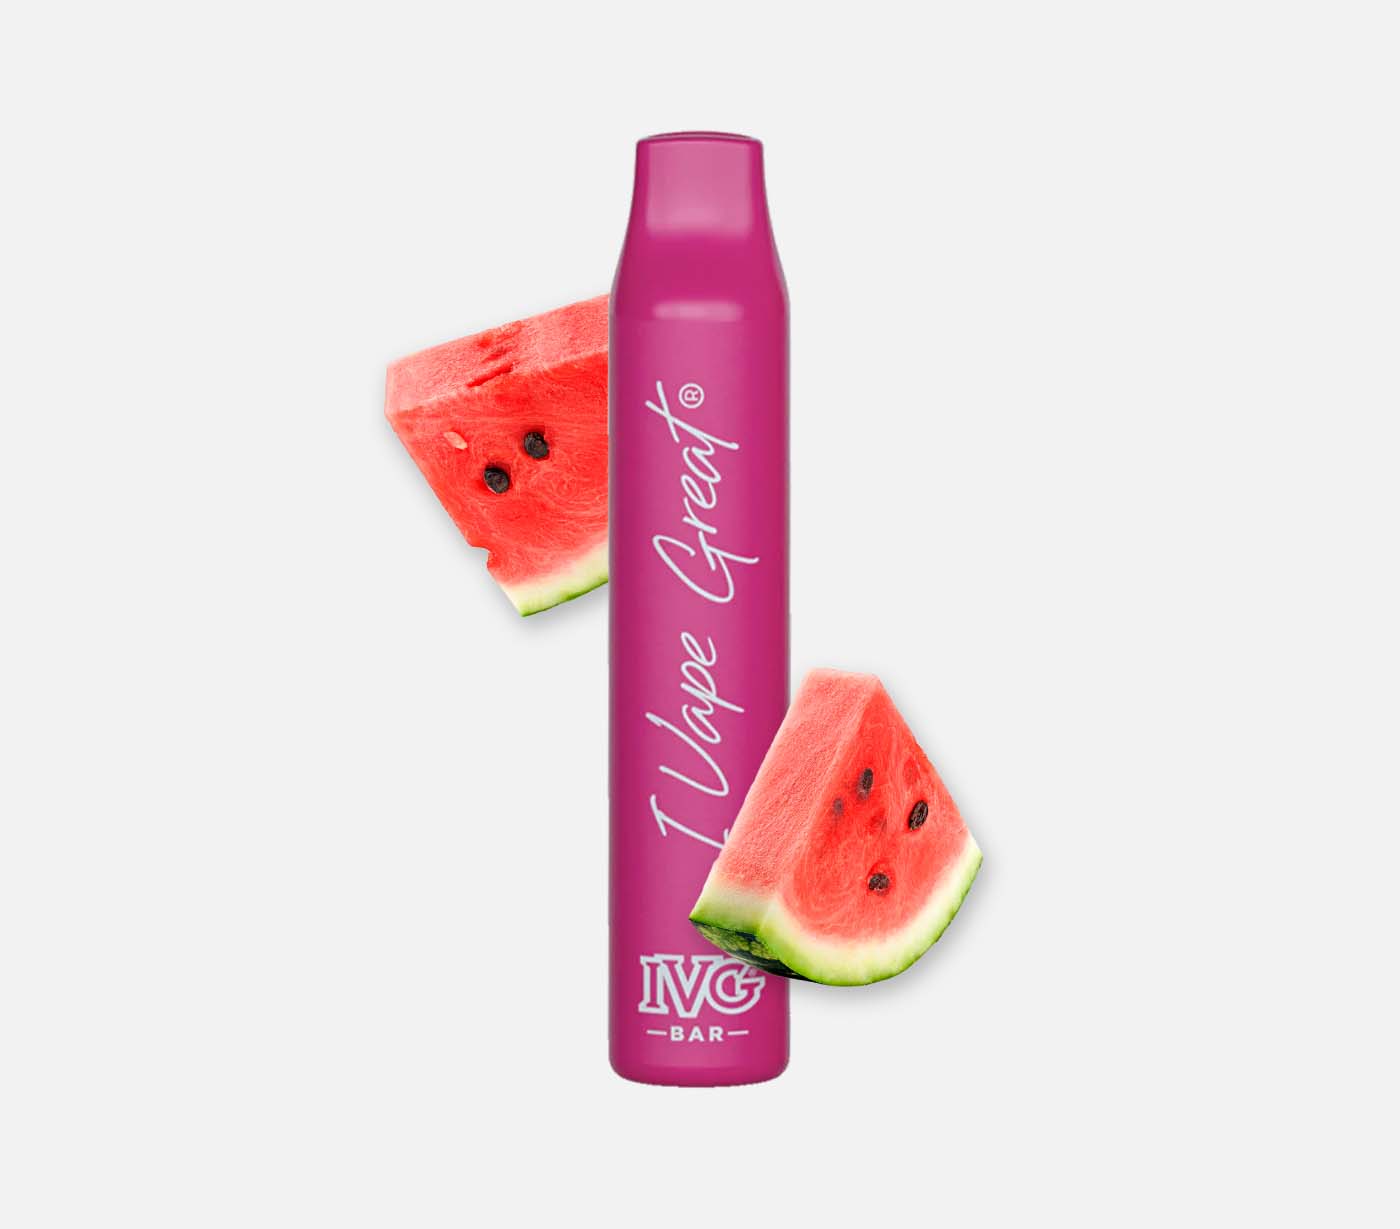 IVG Bar - Watermelon